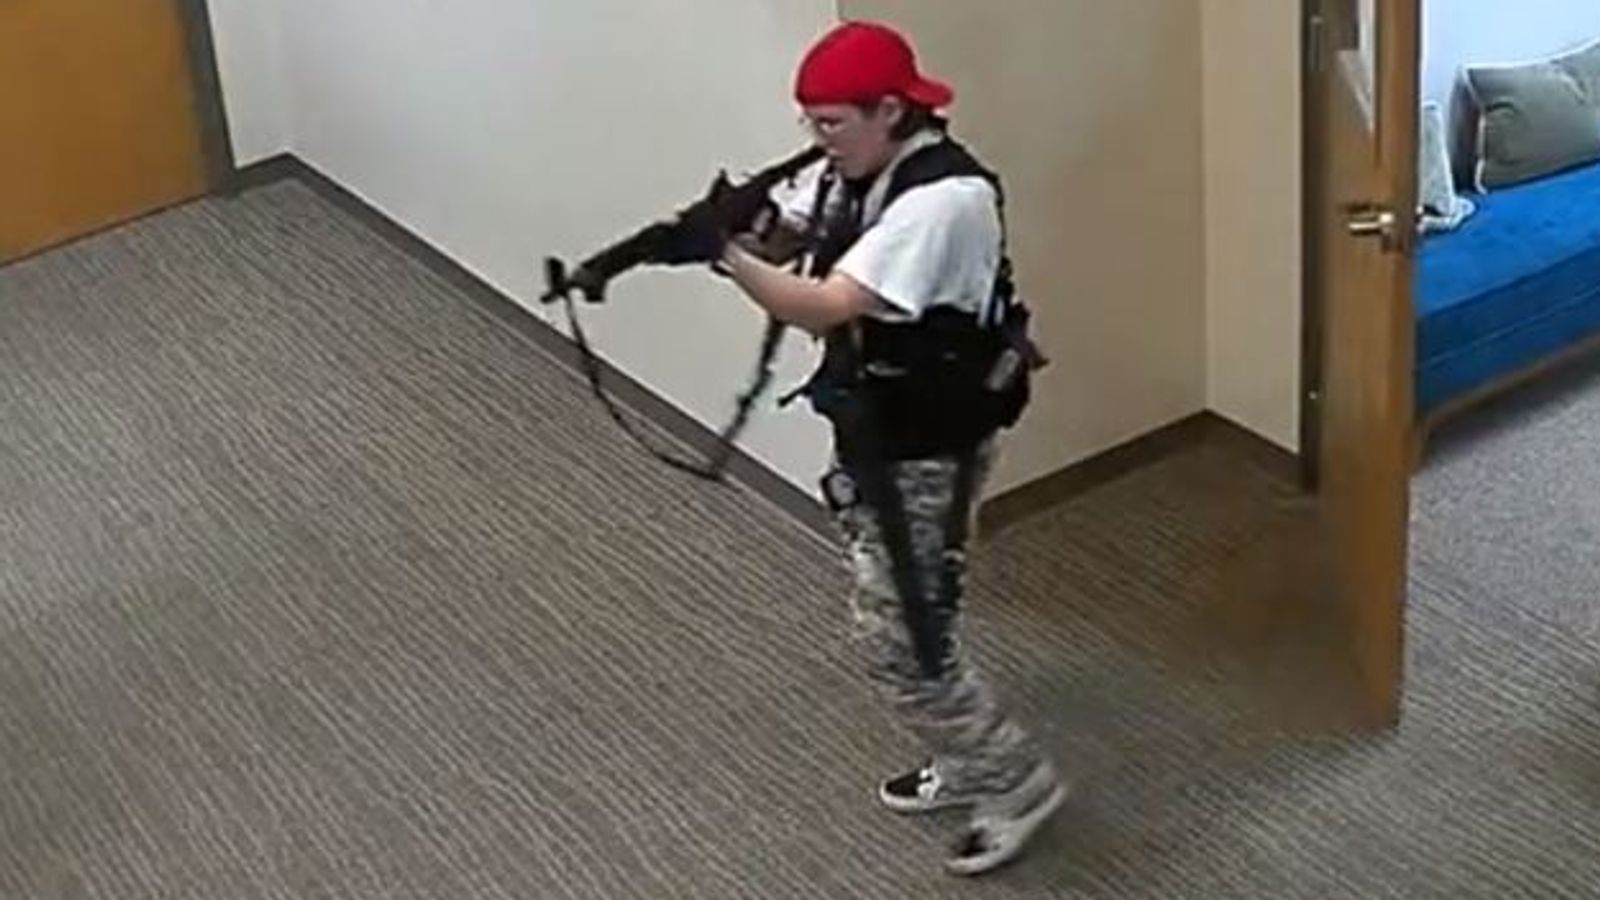 Video of Nashville school killer entering building released by police 